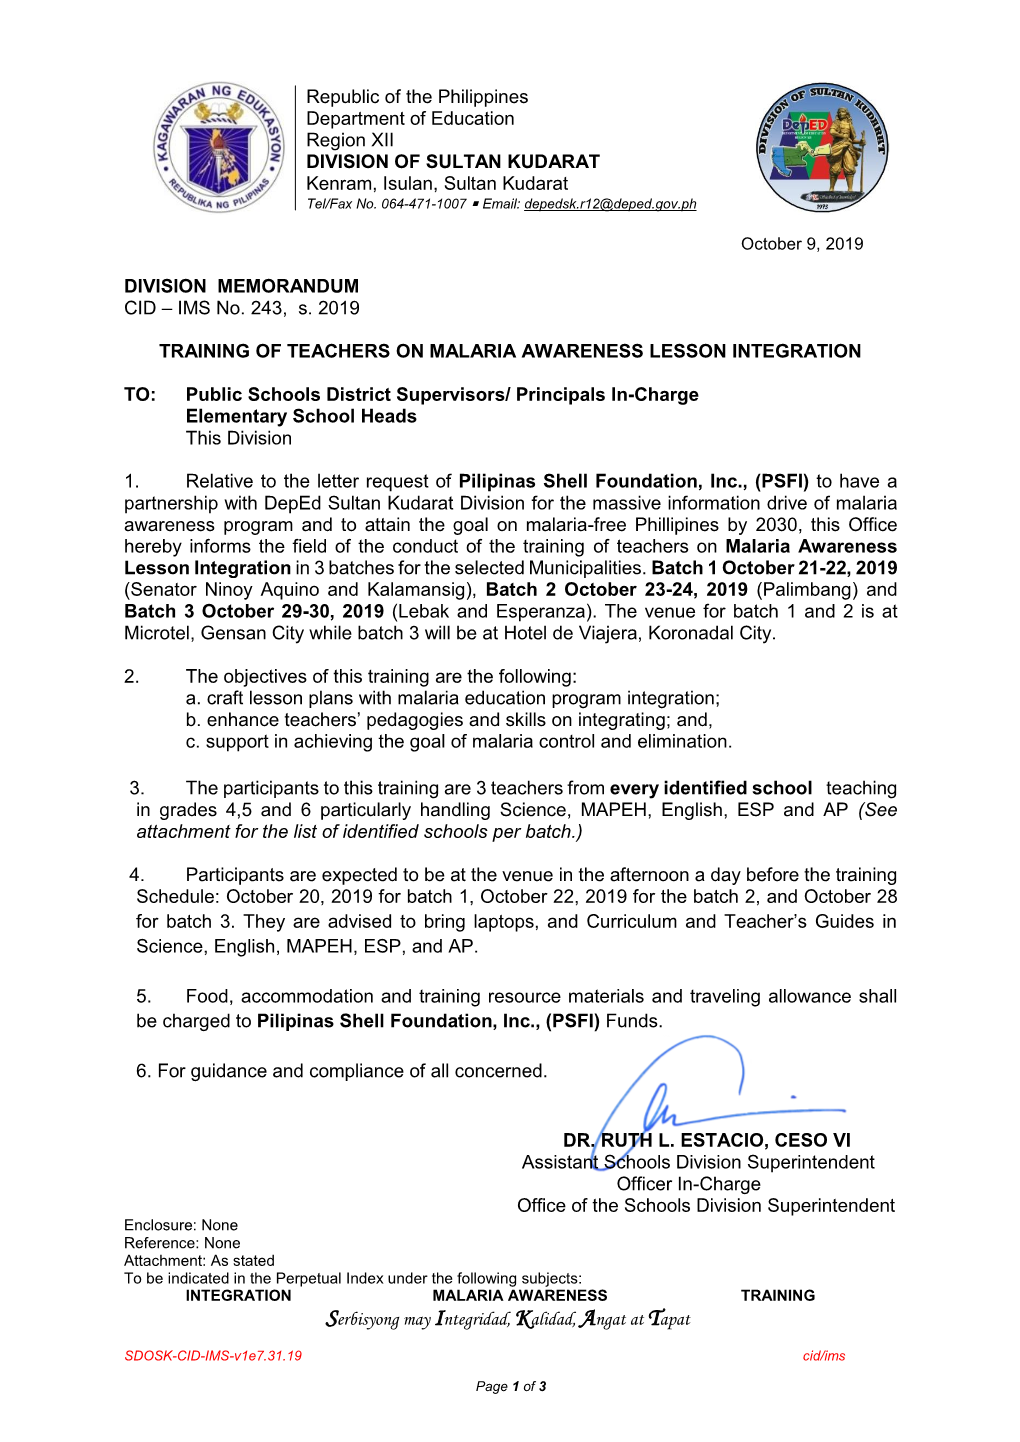 Republic of the Philippines Department of Education Region XII DIVISION of SULTAN KUDARAT Kenram, Isulan, Sultan Kudarat Tel/Fax No